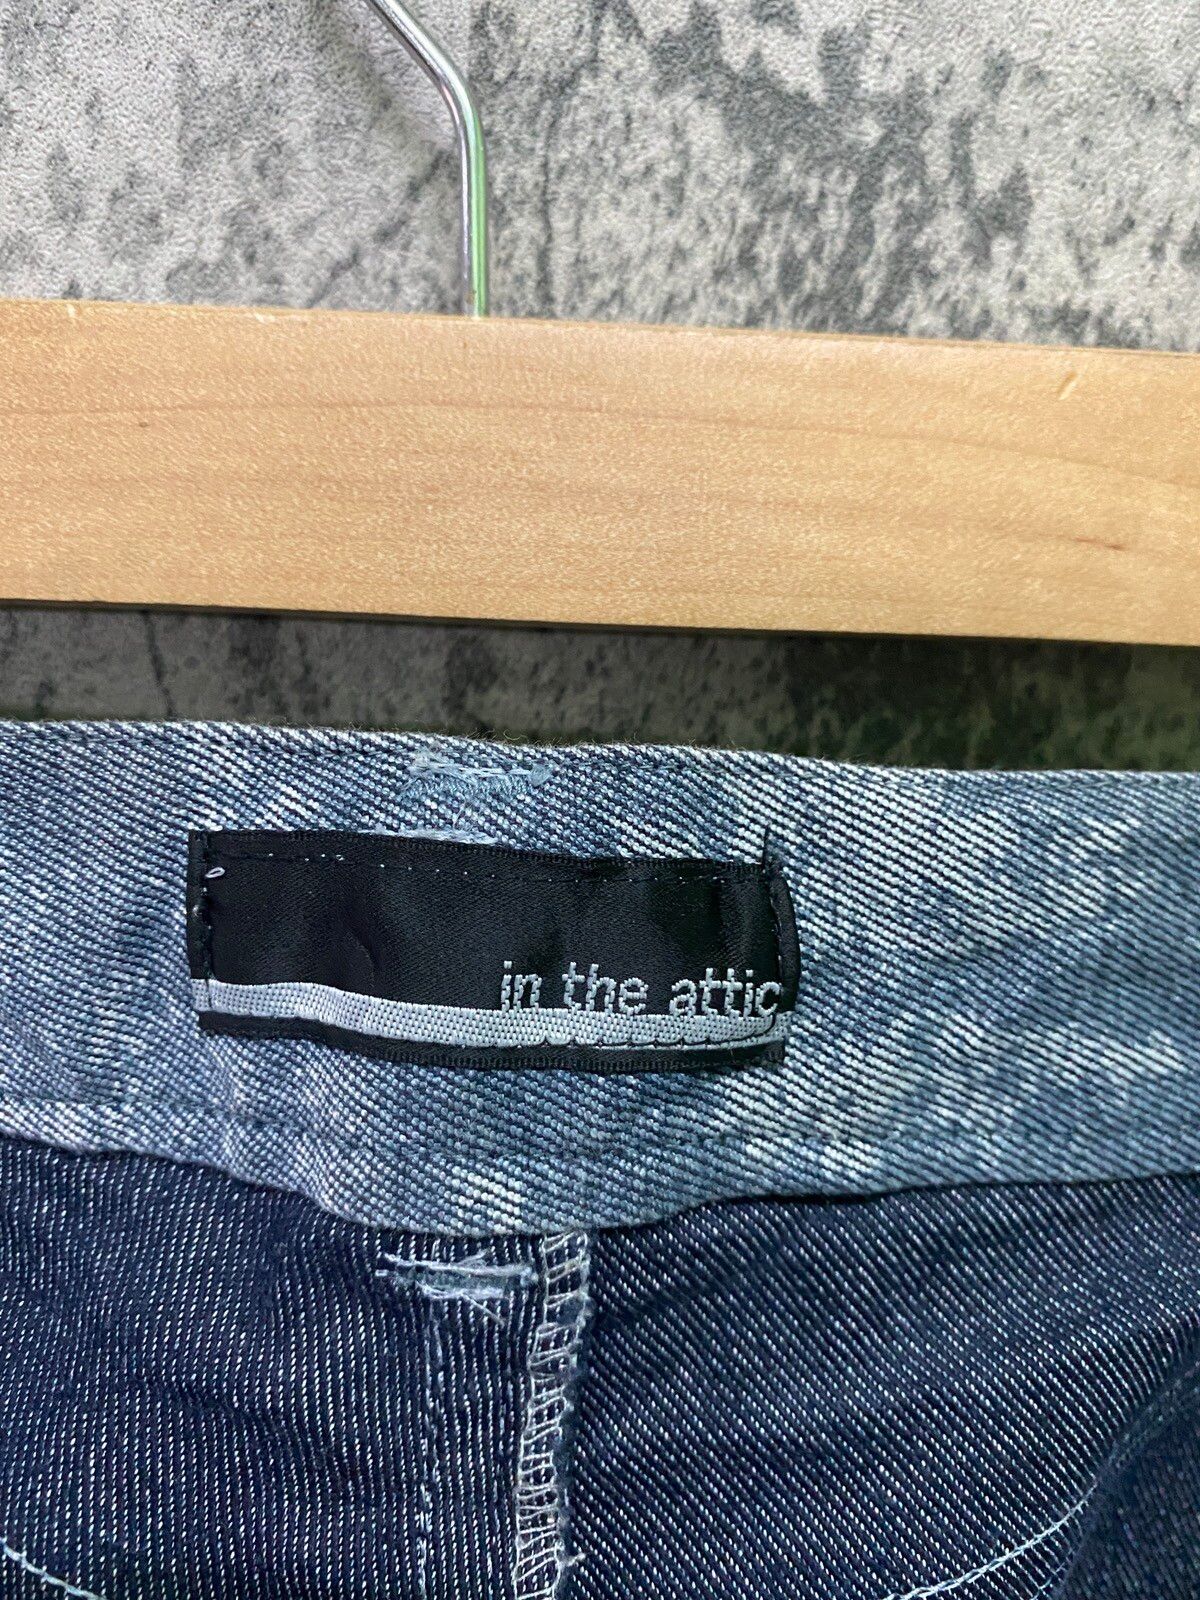 Vintage Vintage IN THE ATTIC Acid Wash Design Rare Pant Size US 30 / EU 46 - 19 Preview